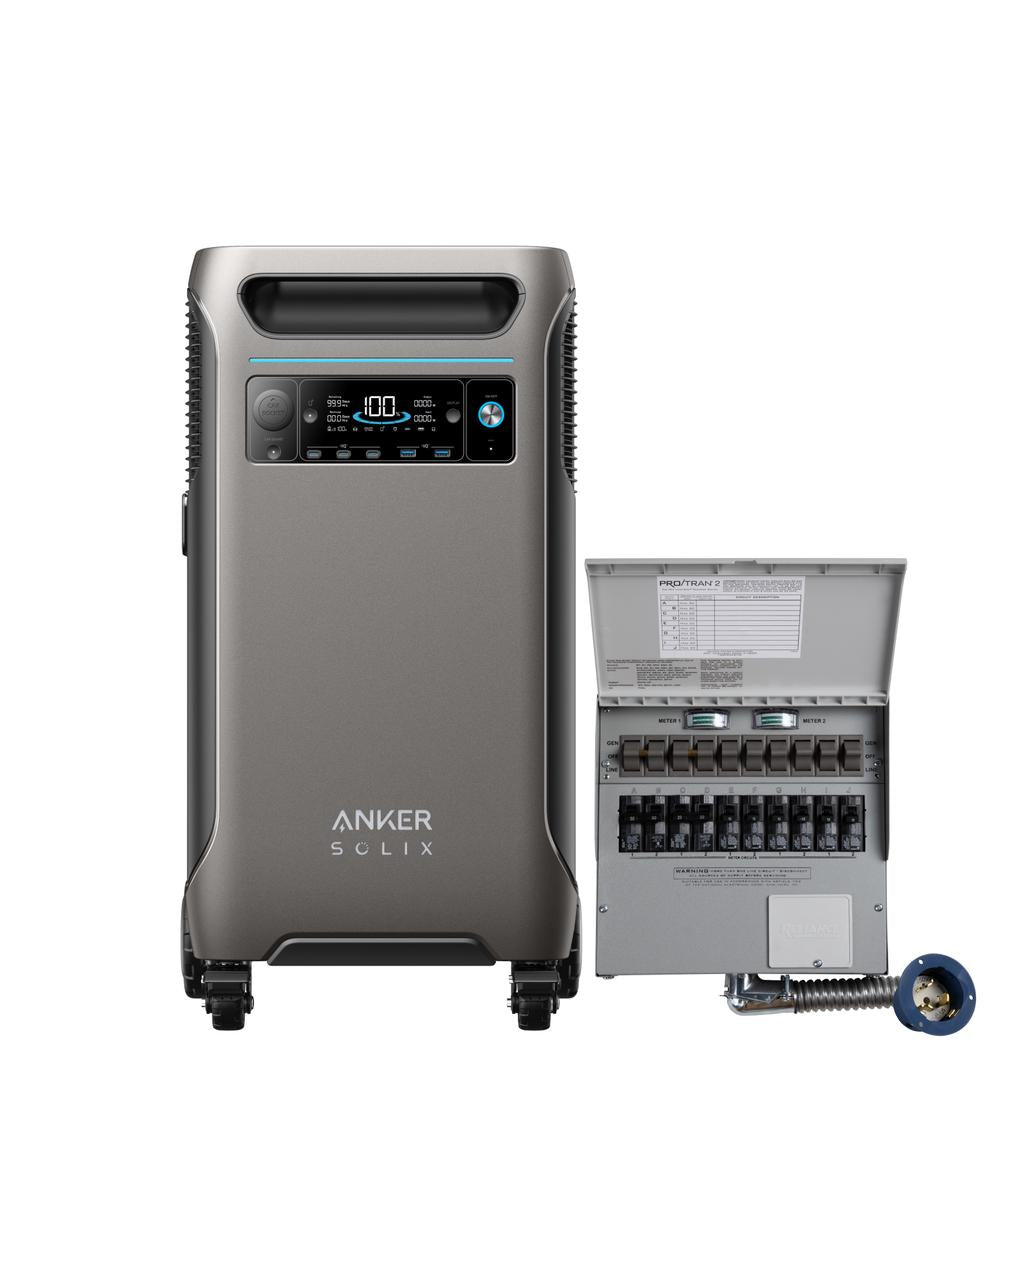 Anker SOLIX &lt;b&gt;F3800&lt;/b&gt; + Home Backup Kit (Transfer switch + cable)